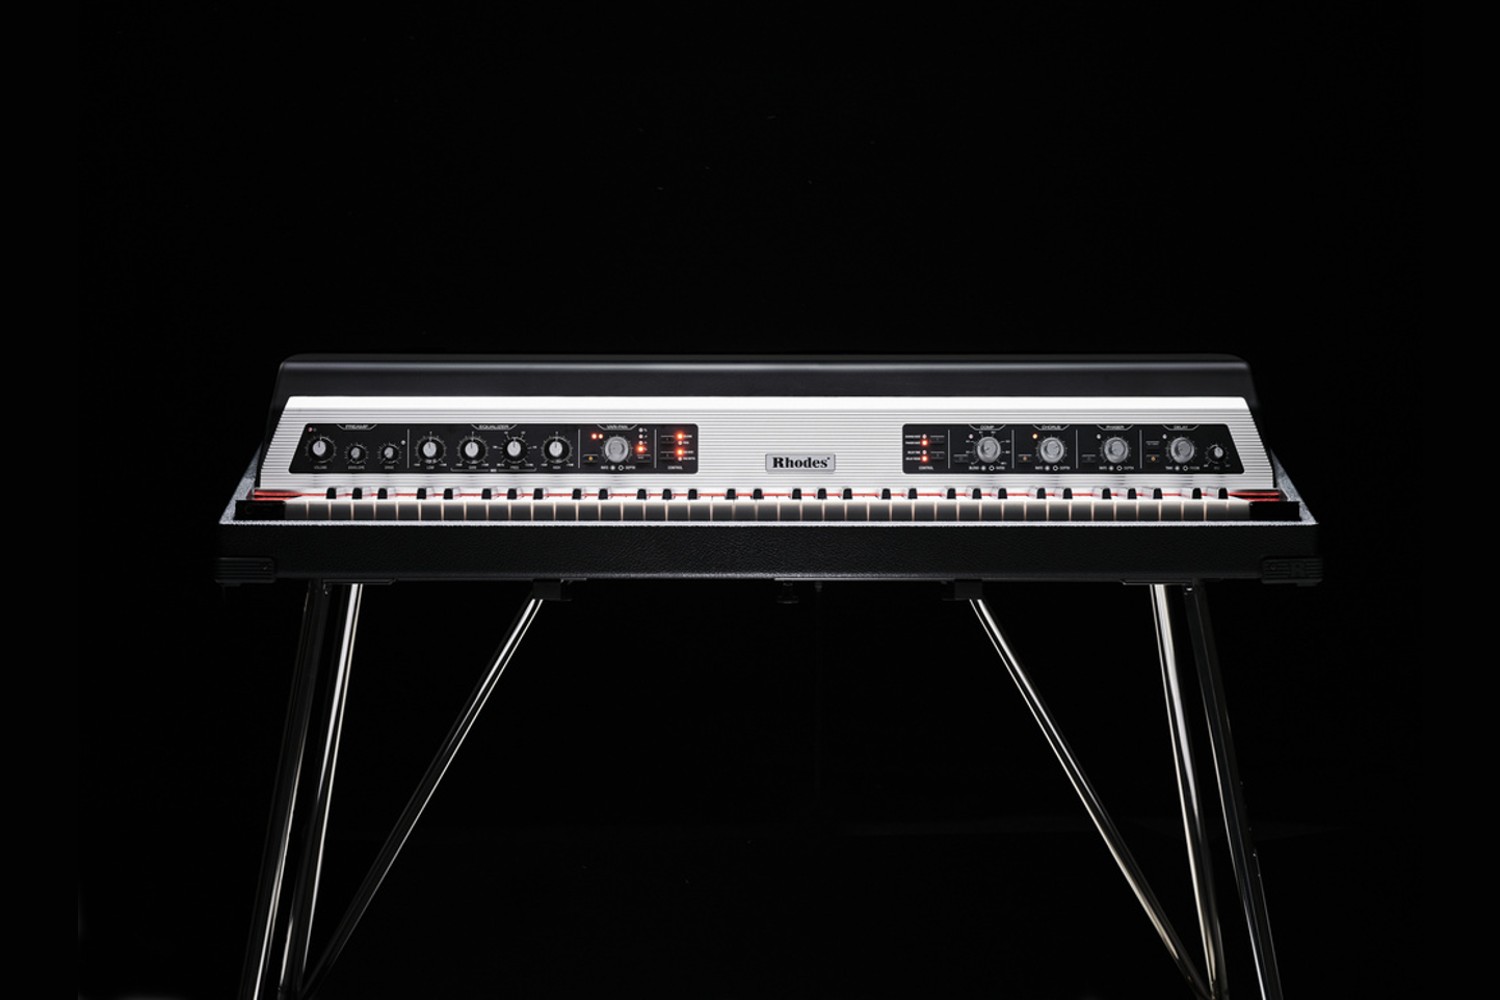 Rhodes MK8 keyboard product shot